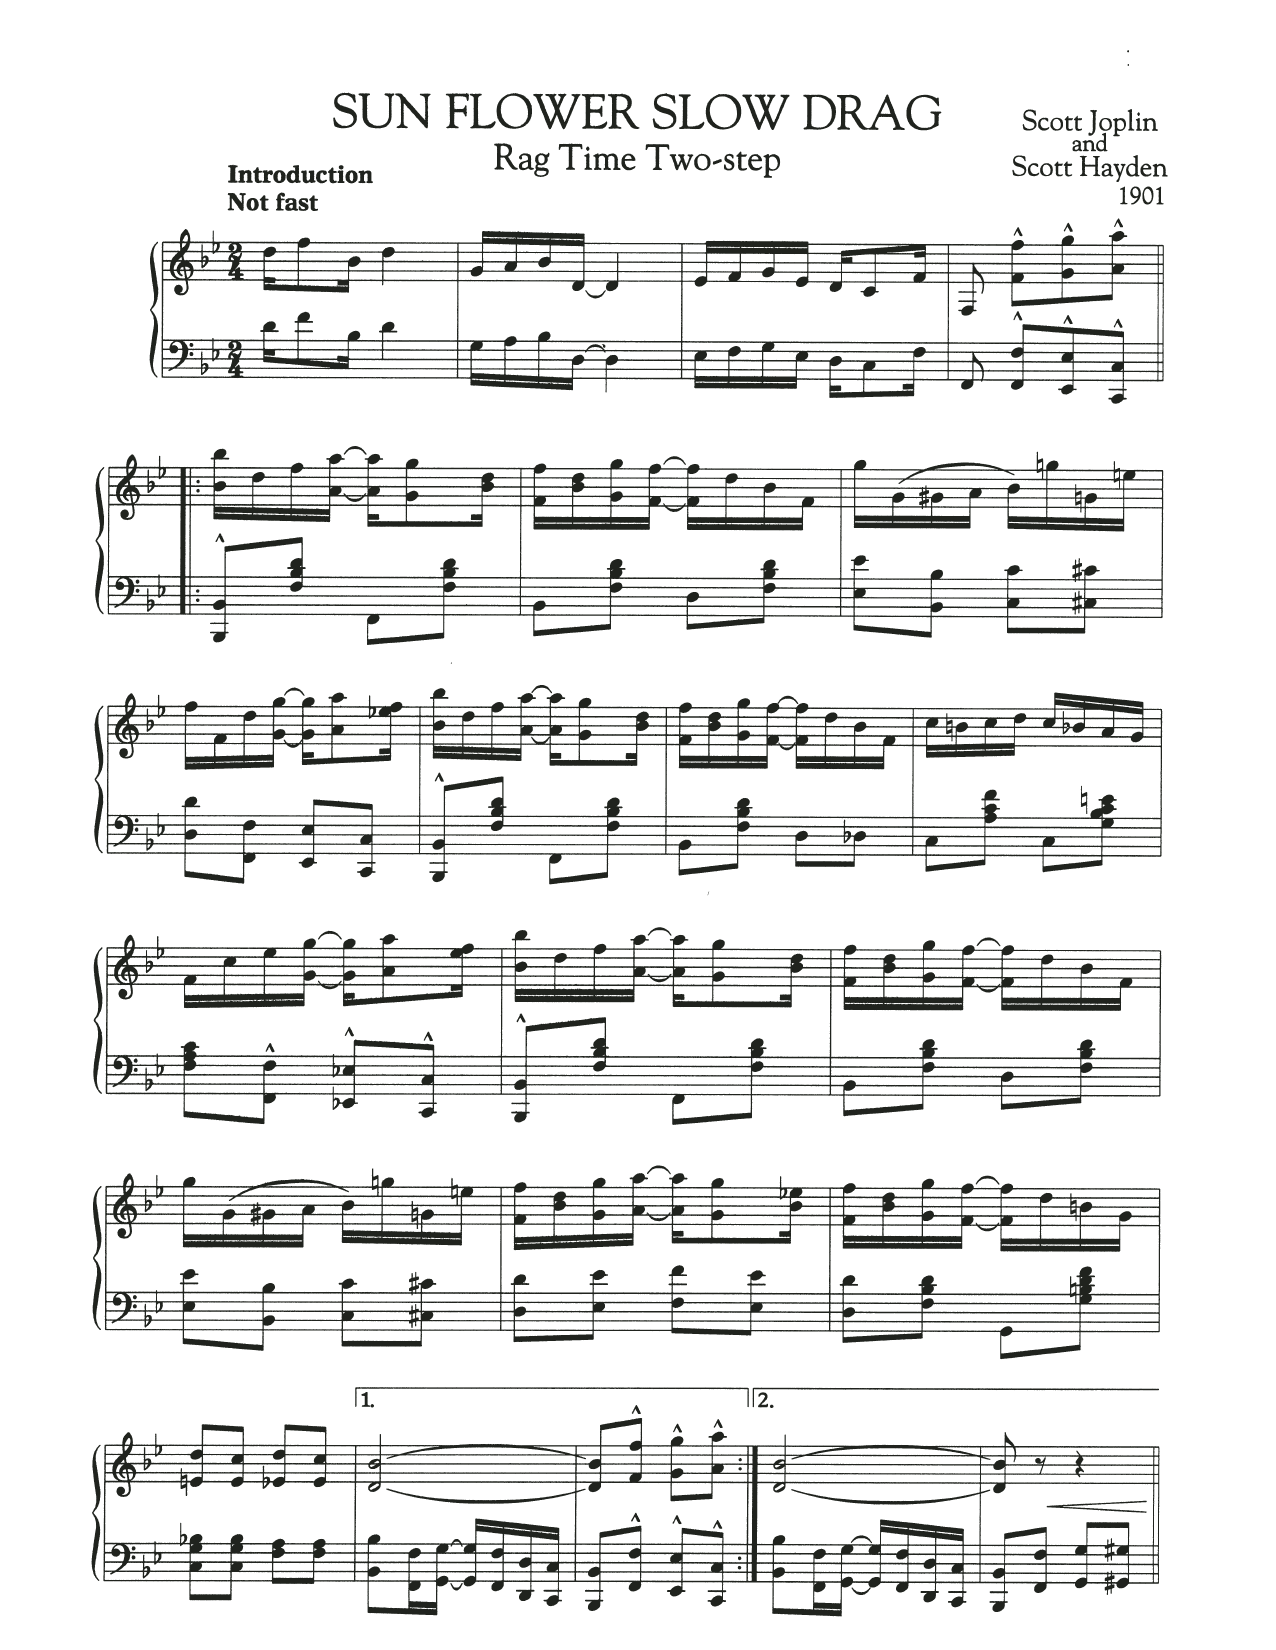 Download Scott Joplin Sun Flower Slow Drag Sheet Music and learn how to play Piano Solo PDF digital score in minutes